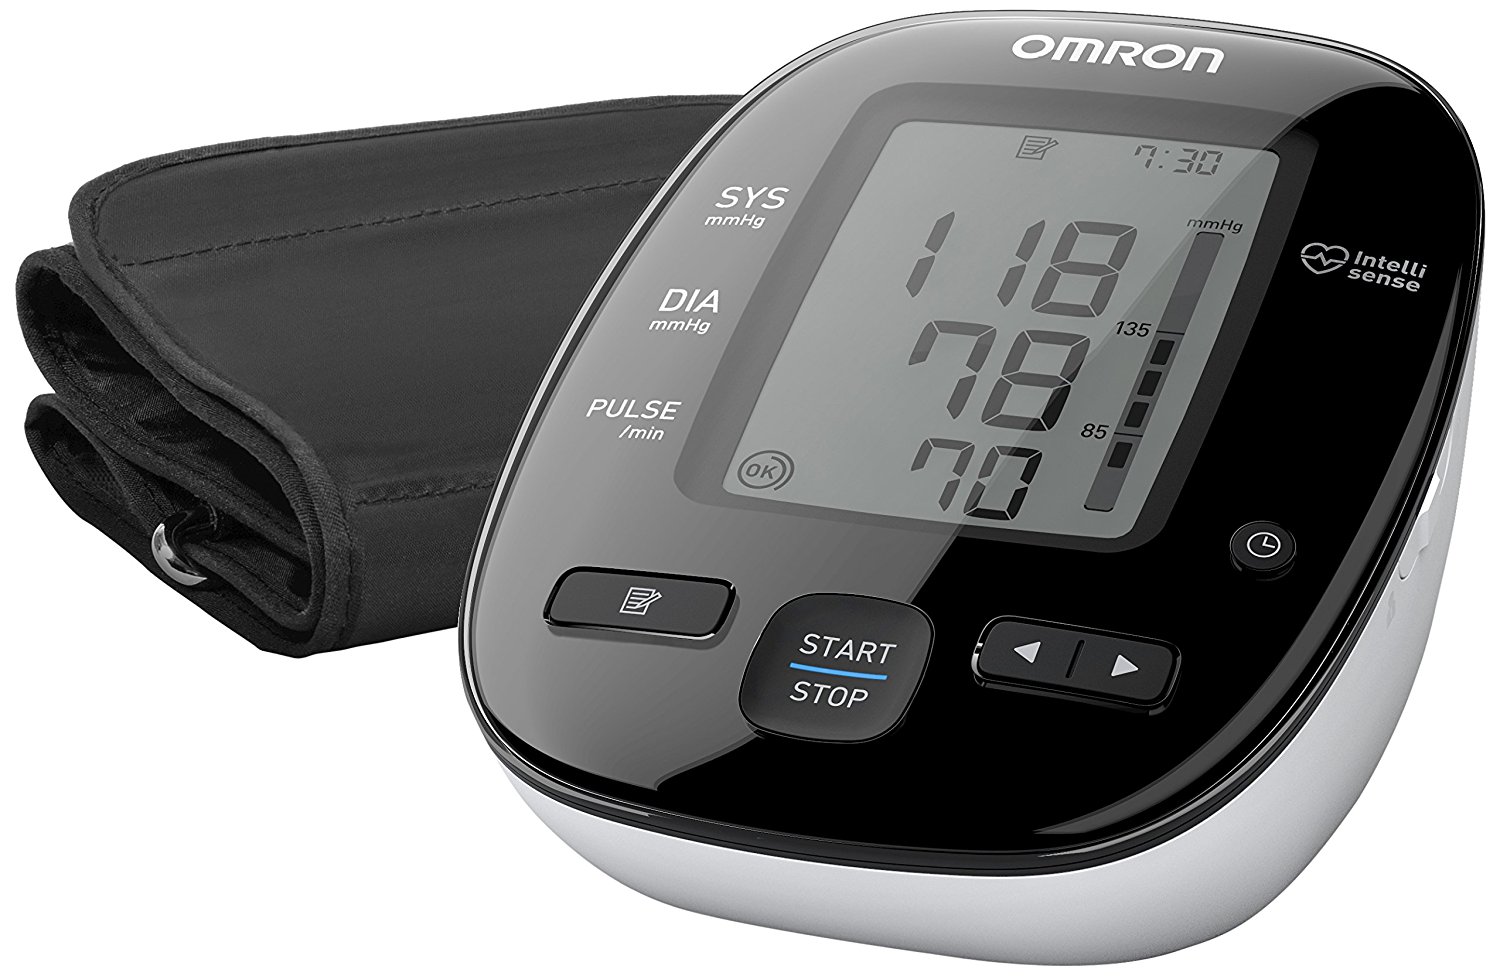 The Omron Blood Pressure Monitor